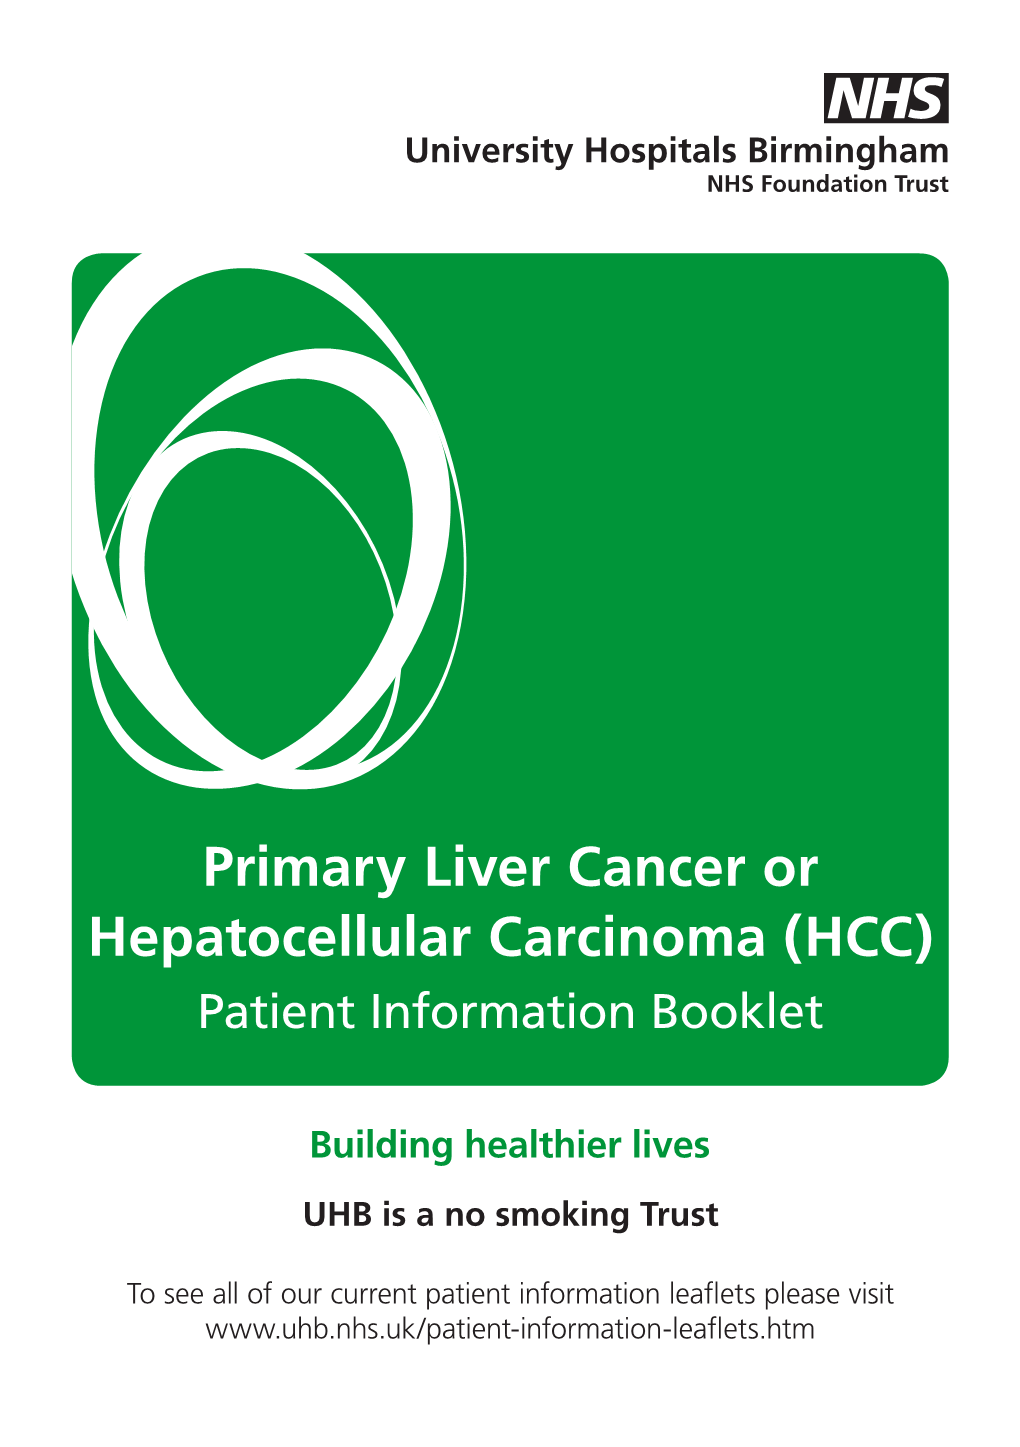 Primary Liver Cancer Or Hepatocellular Carcinoma (HCC) Patient Information Booklet